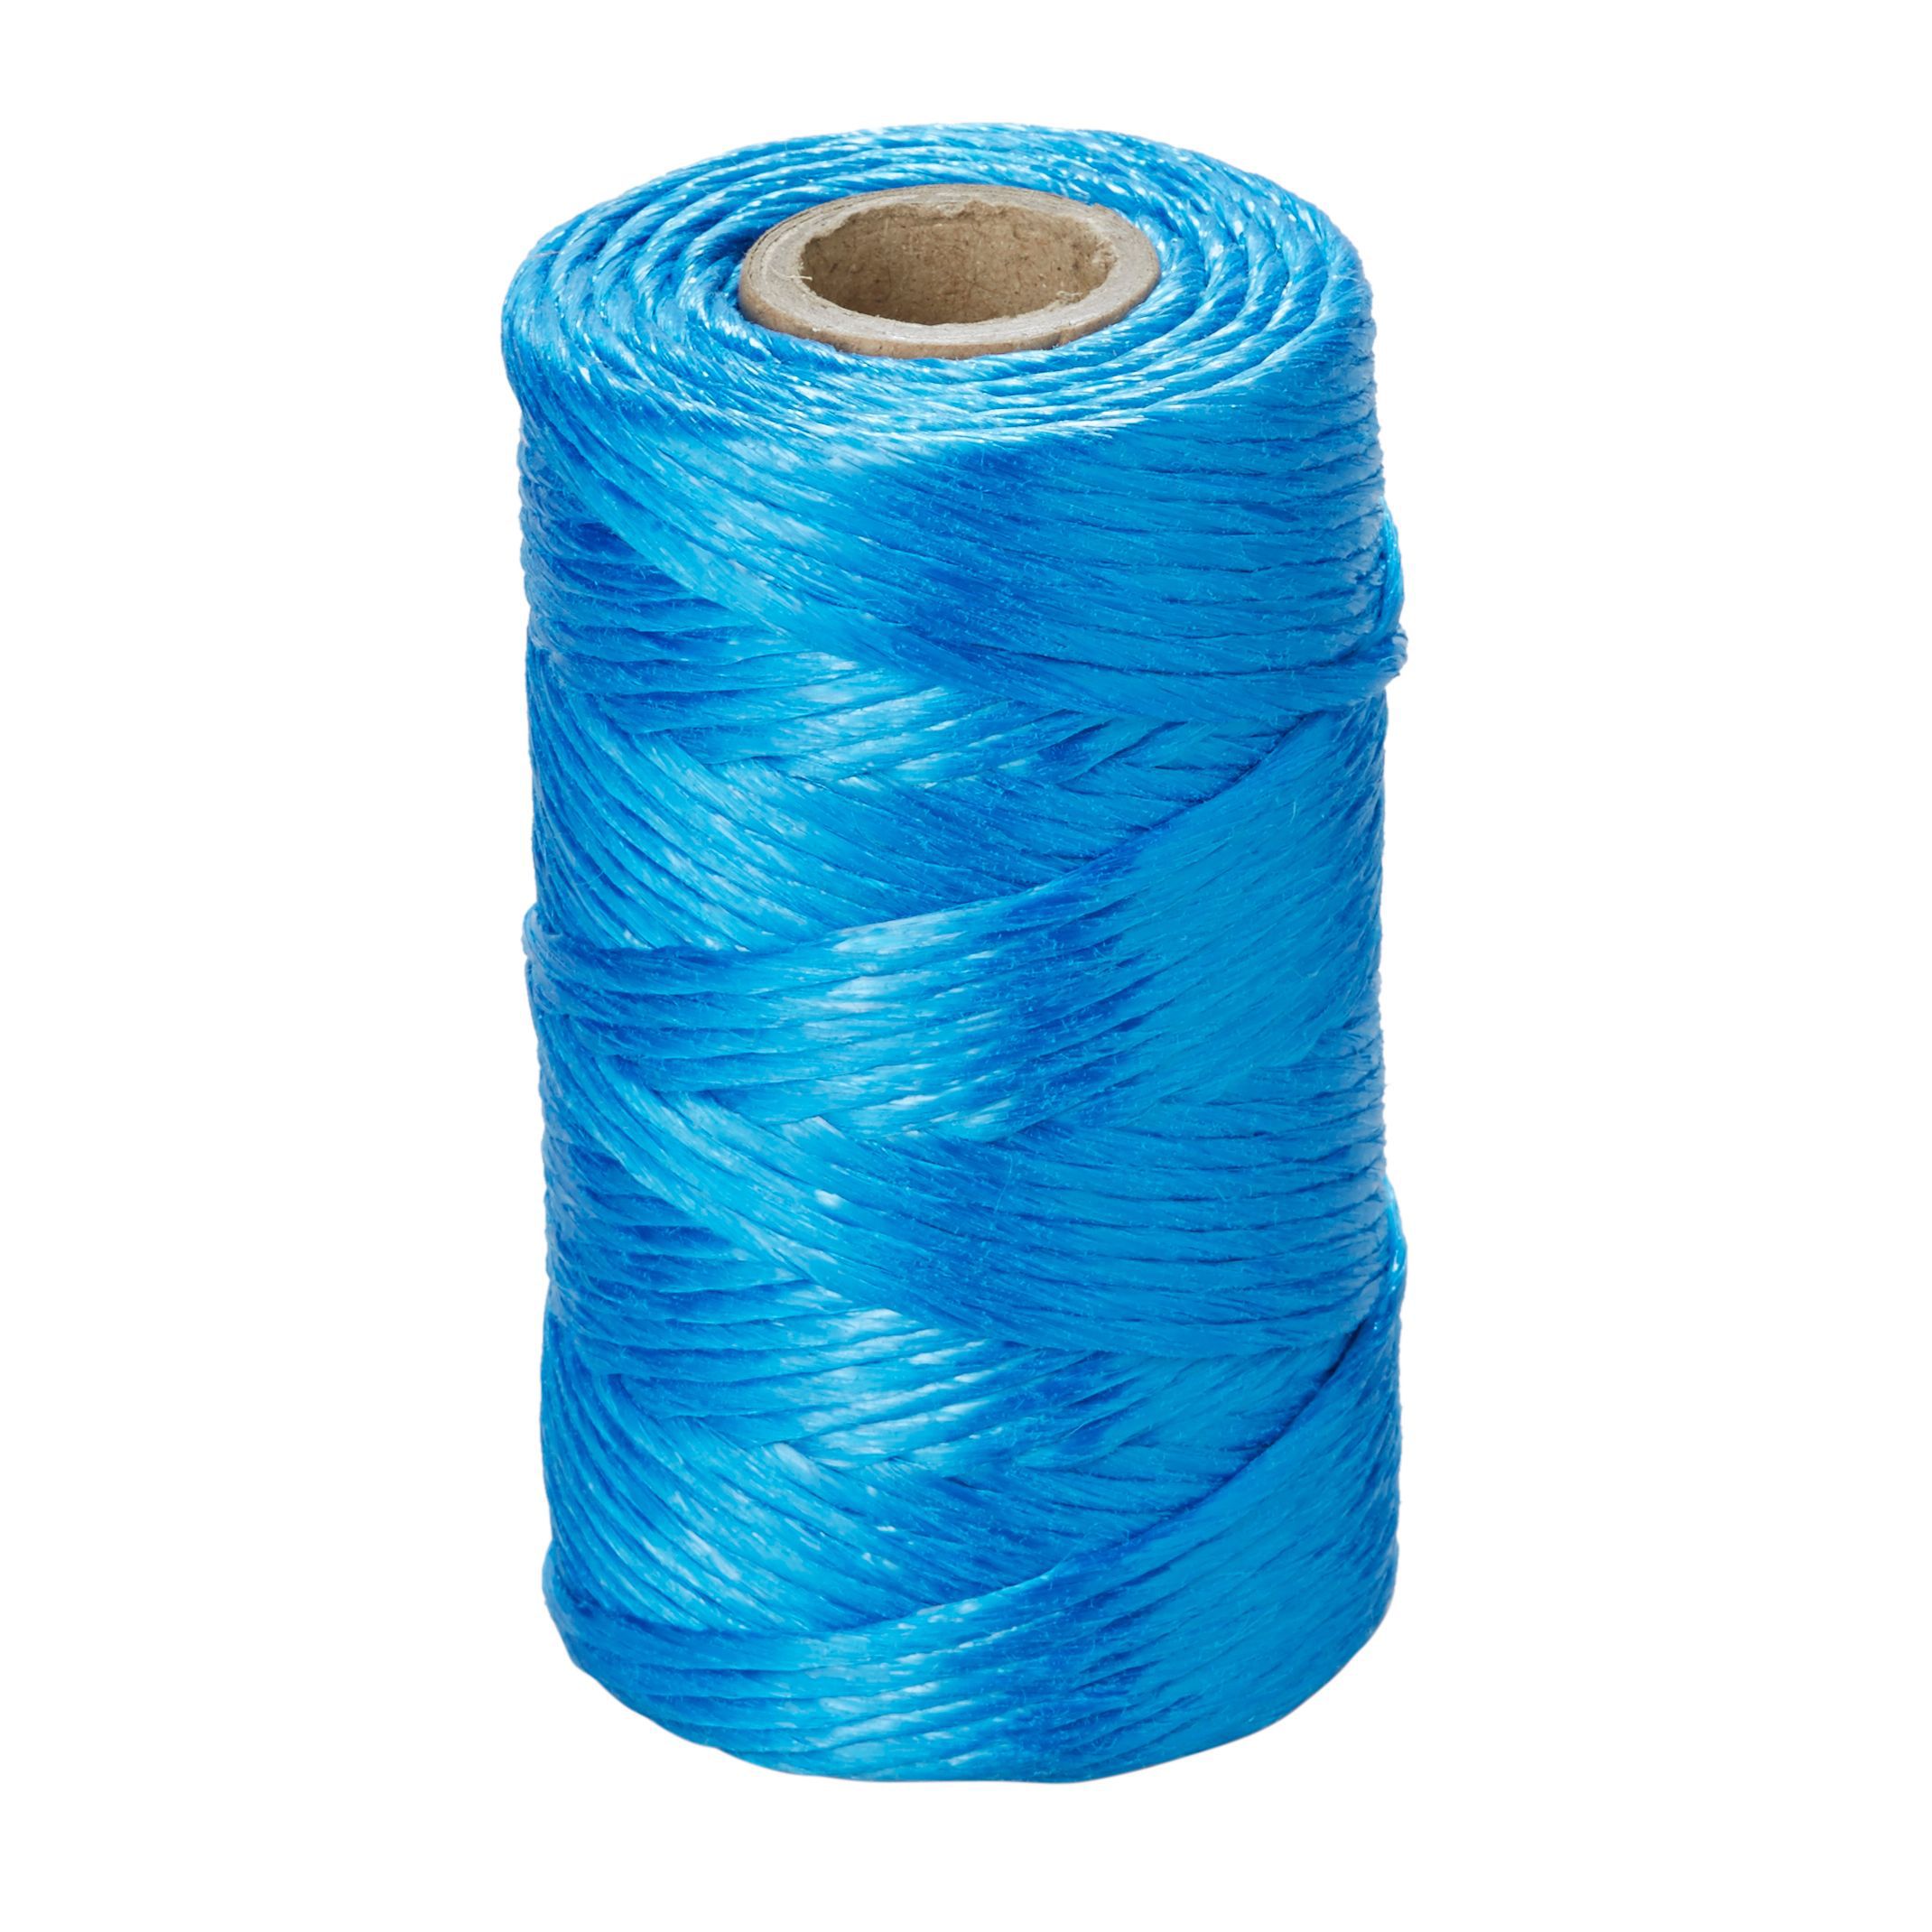 6mm Blue Polypropylene Rope/Twine